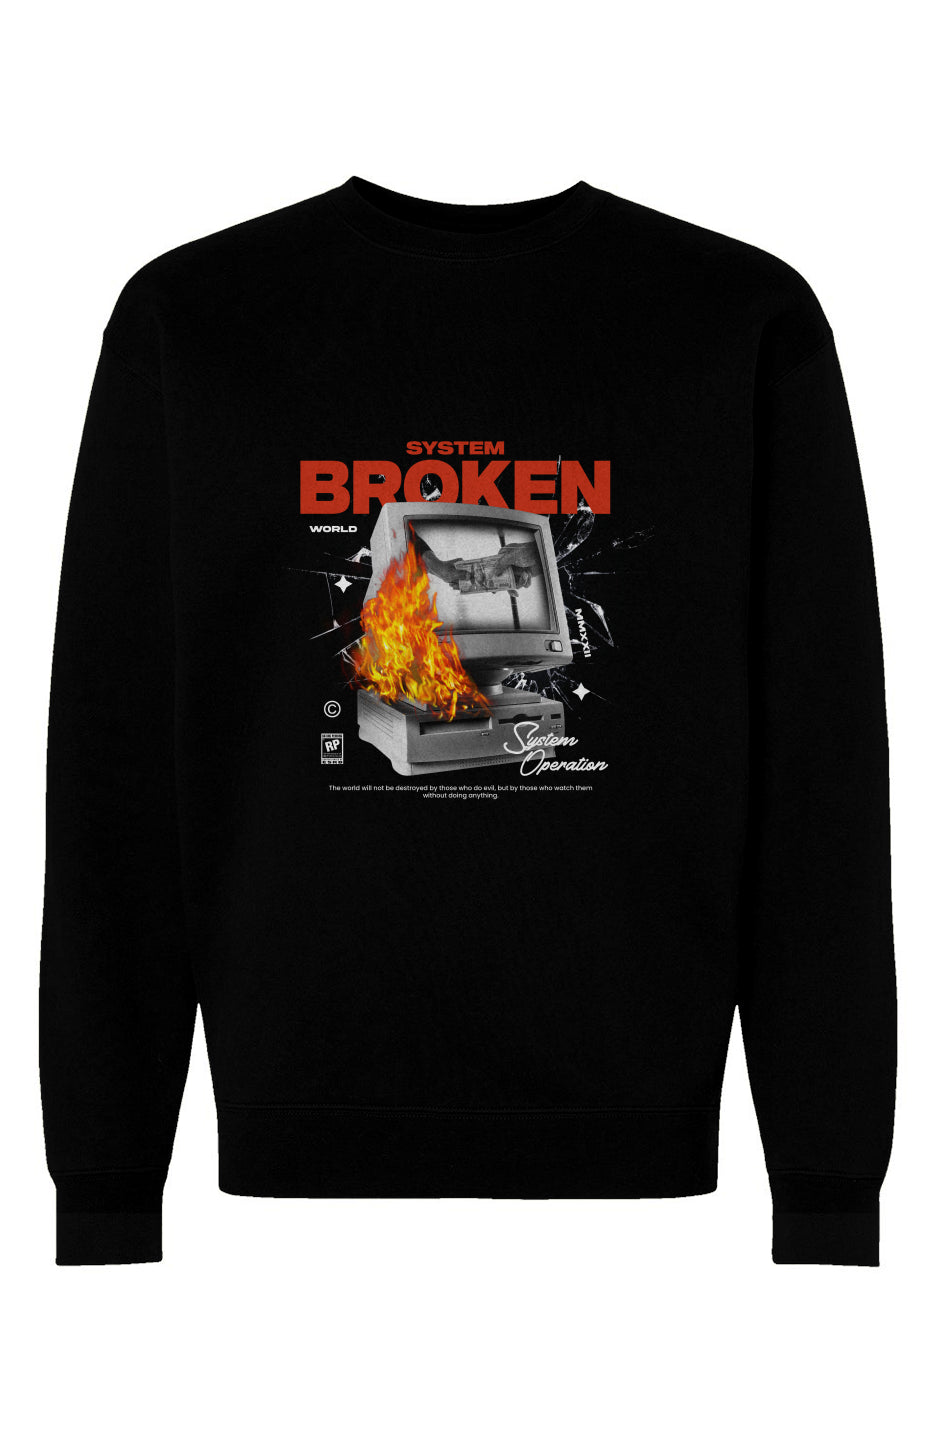 Broken System Sweatshirt